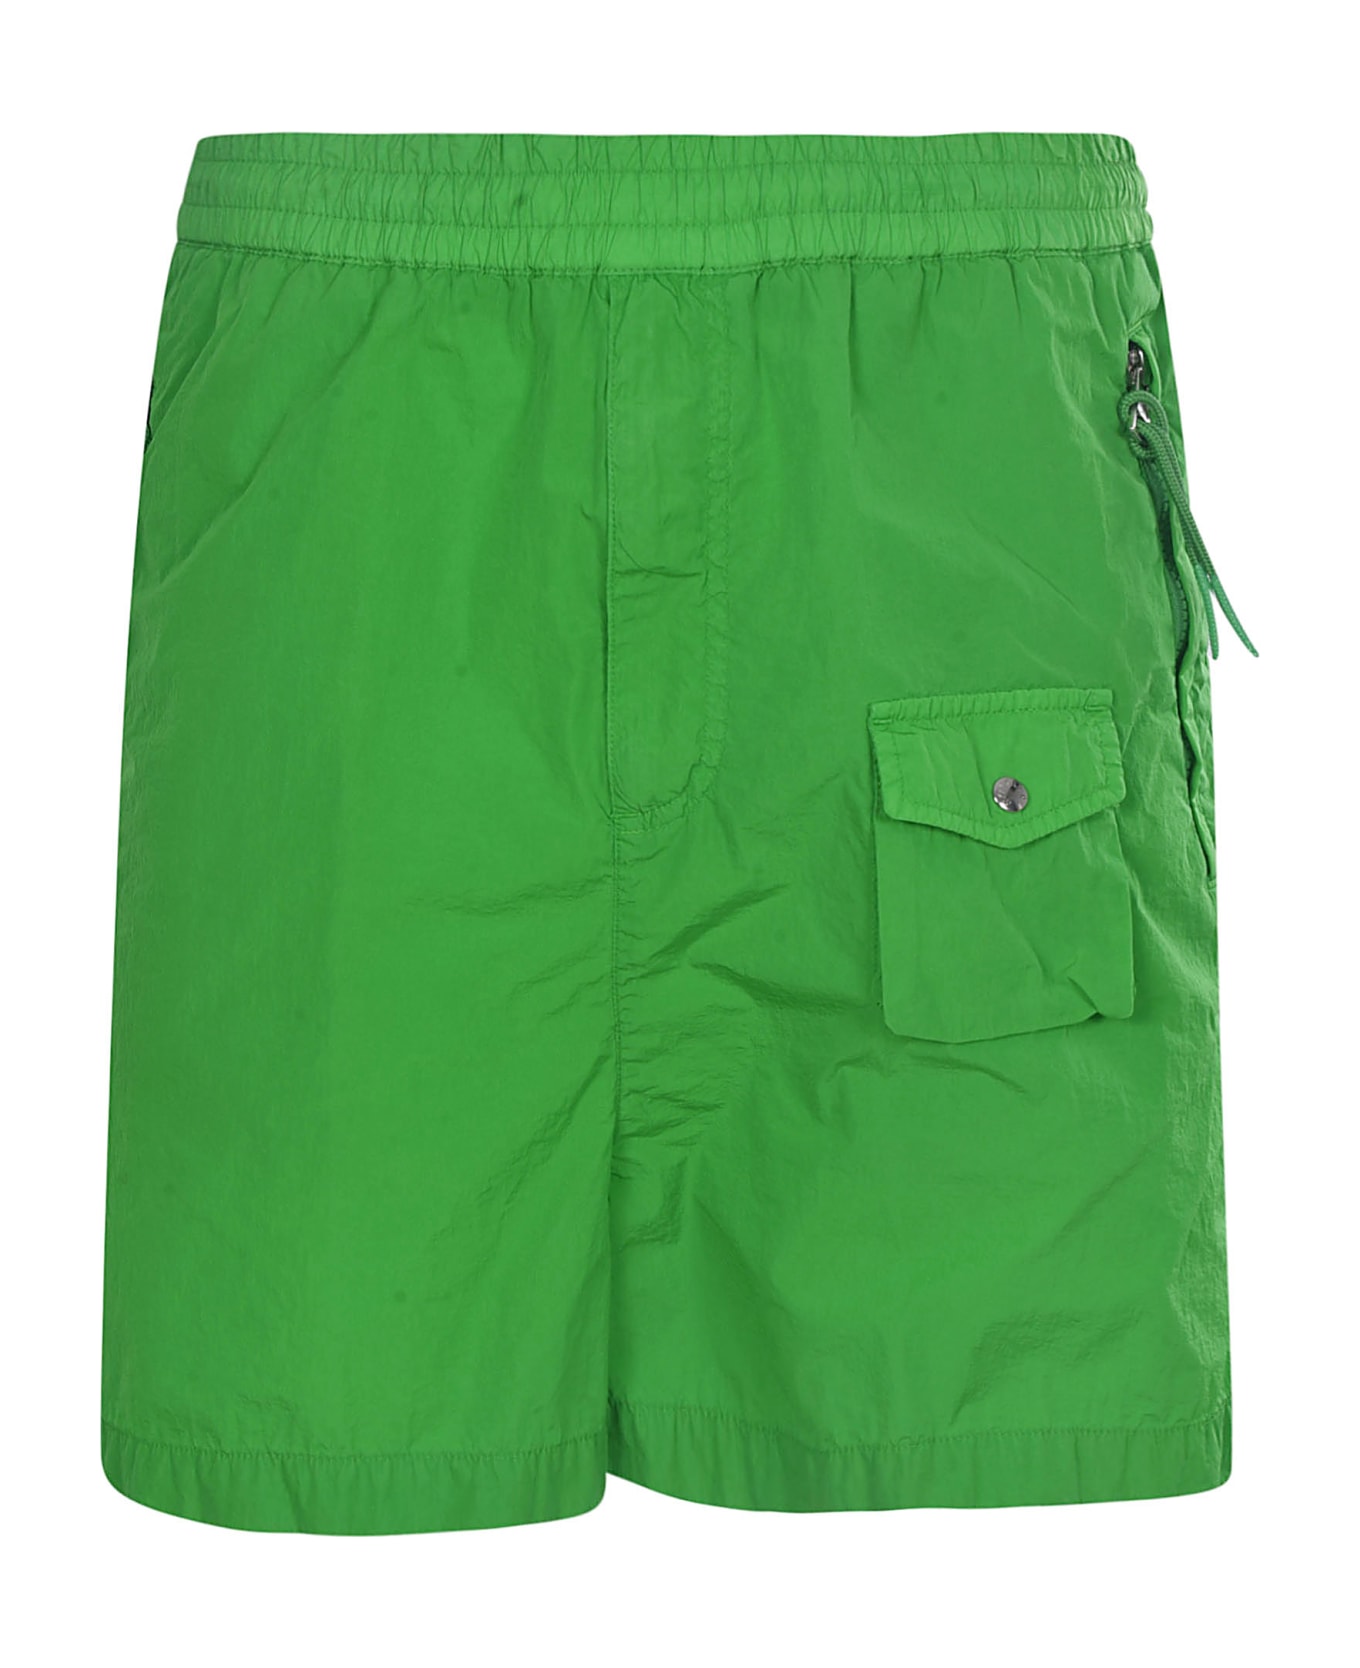 Moncler Genius Multi-pocket Detailed Shorts - Verde ショートパンツ